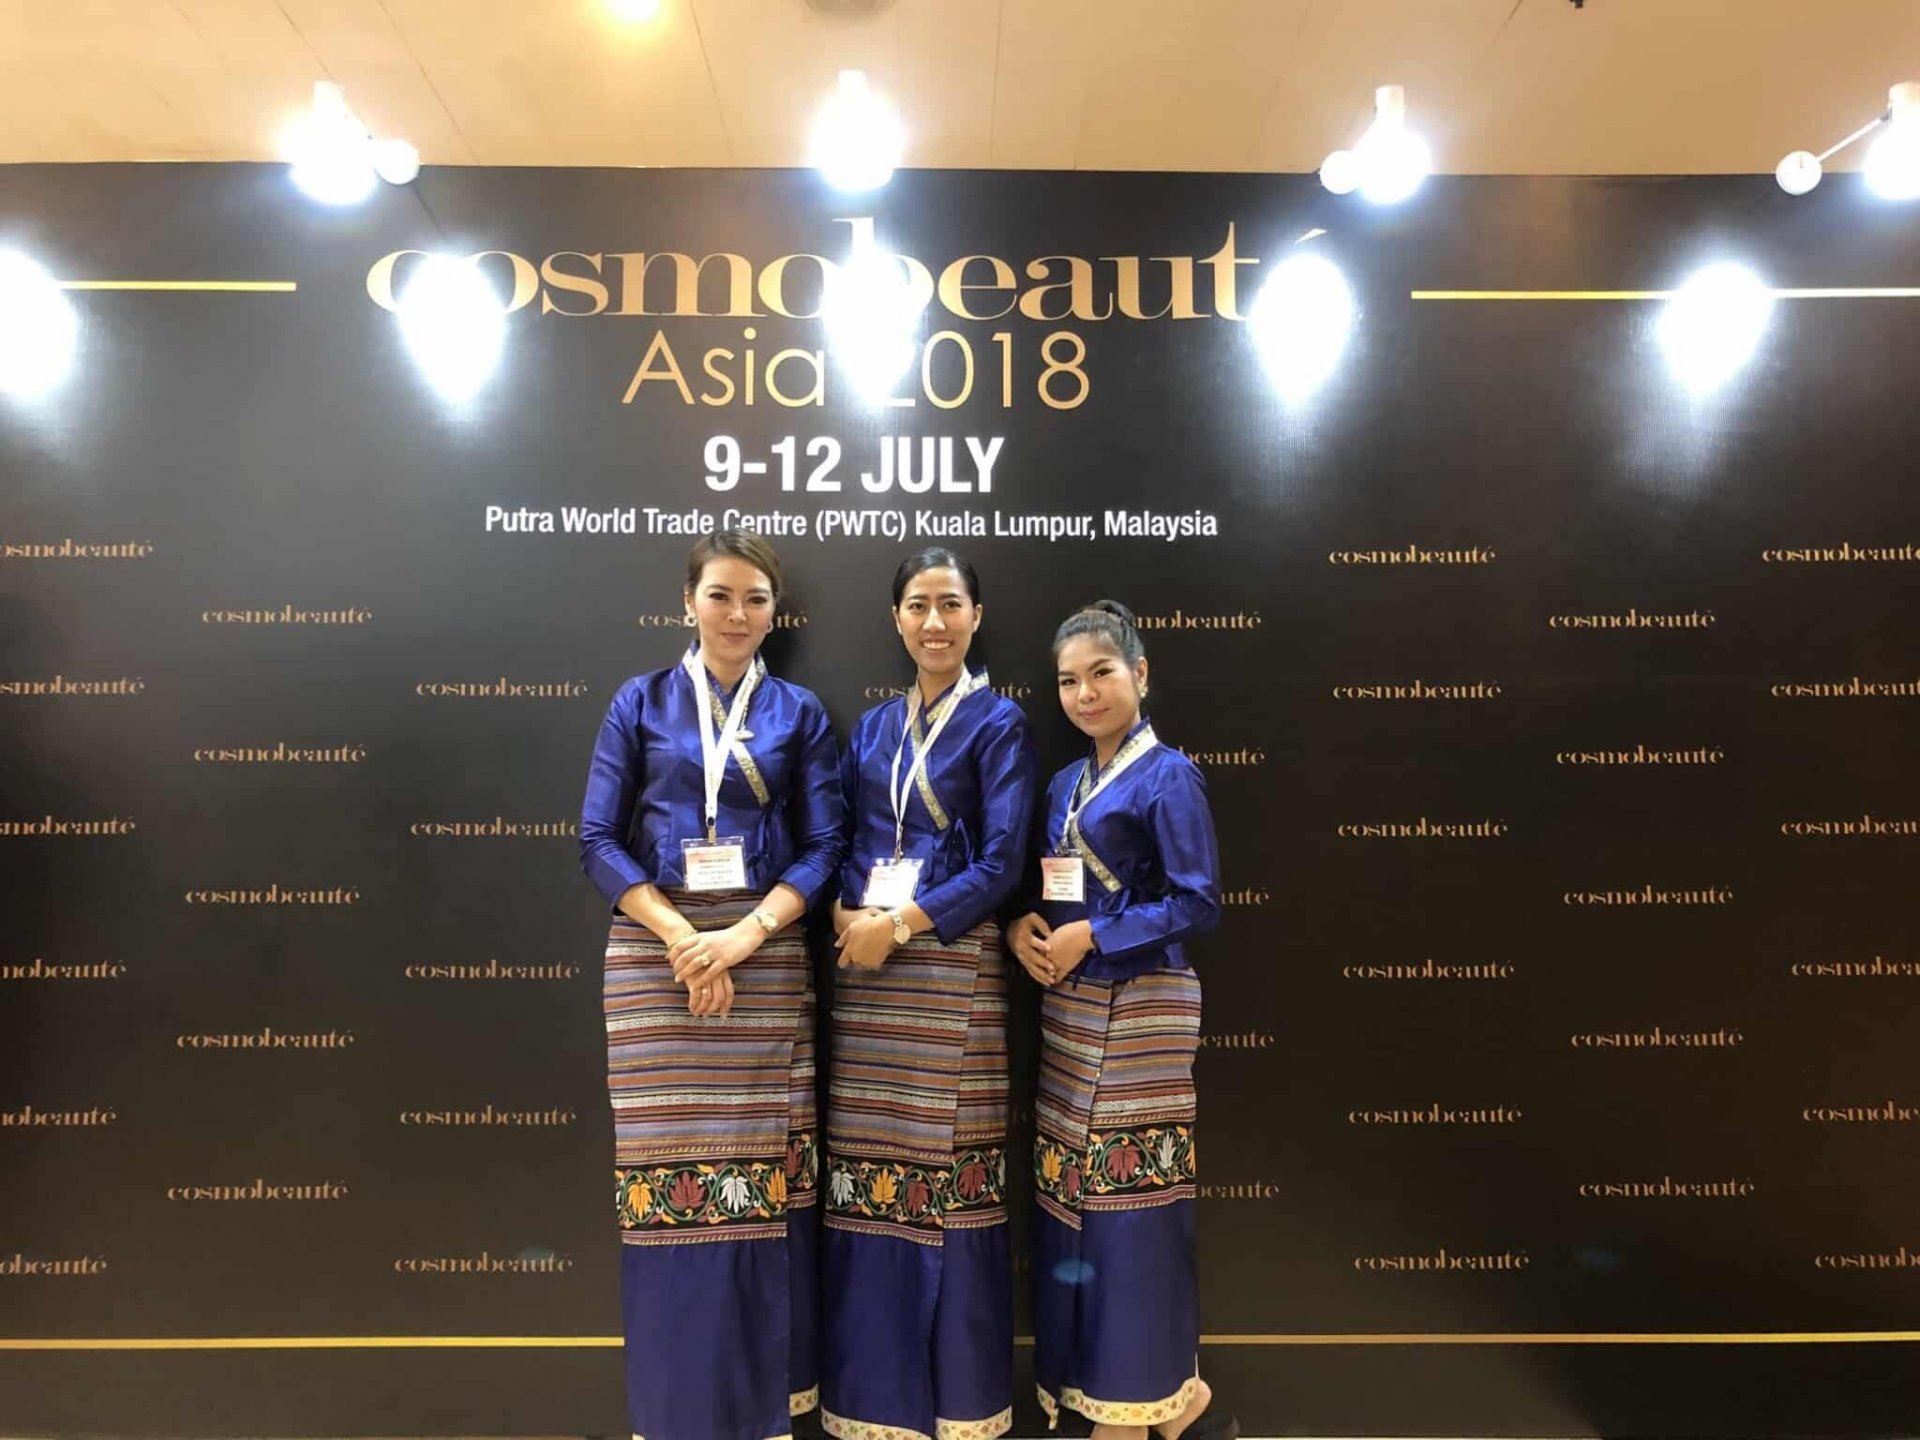 Cosmobeauty Asia 2018